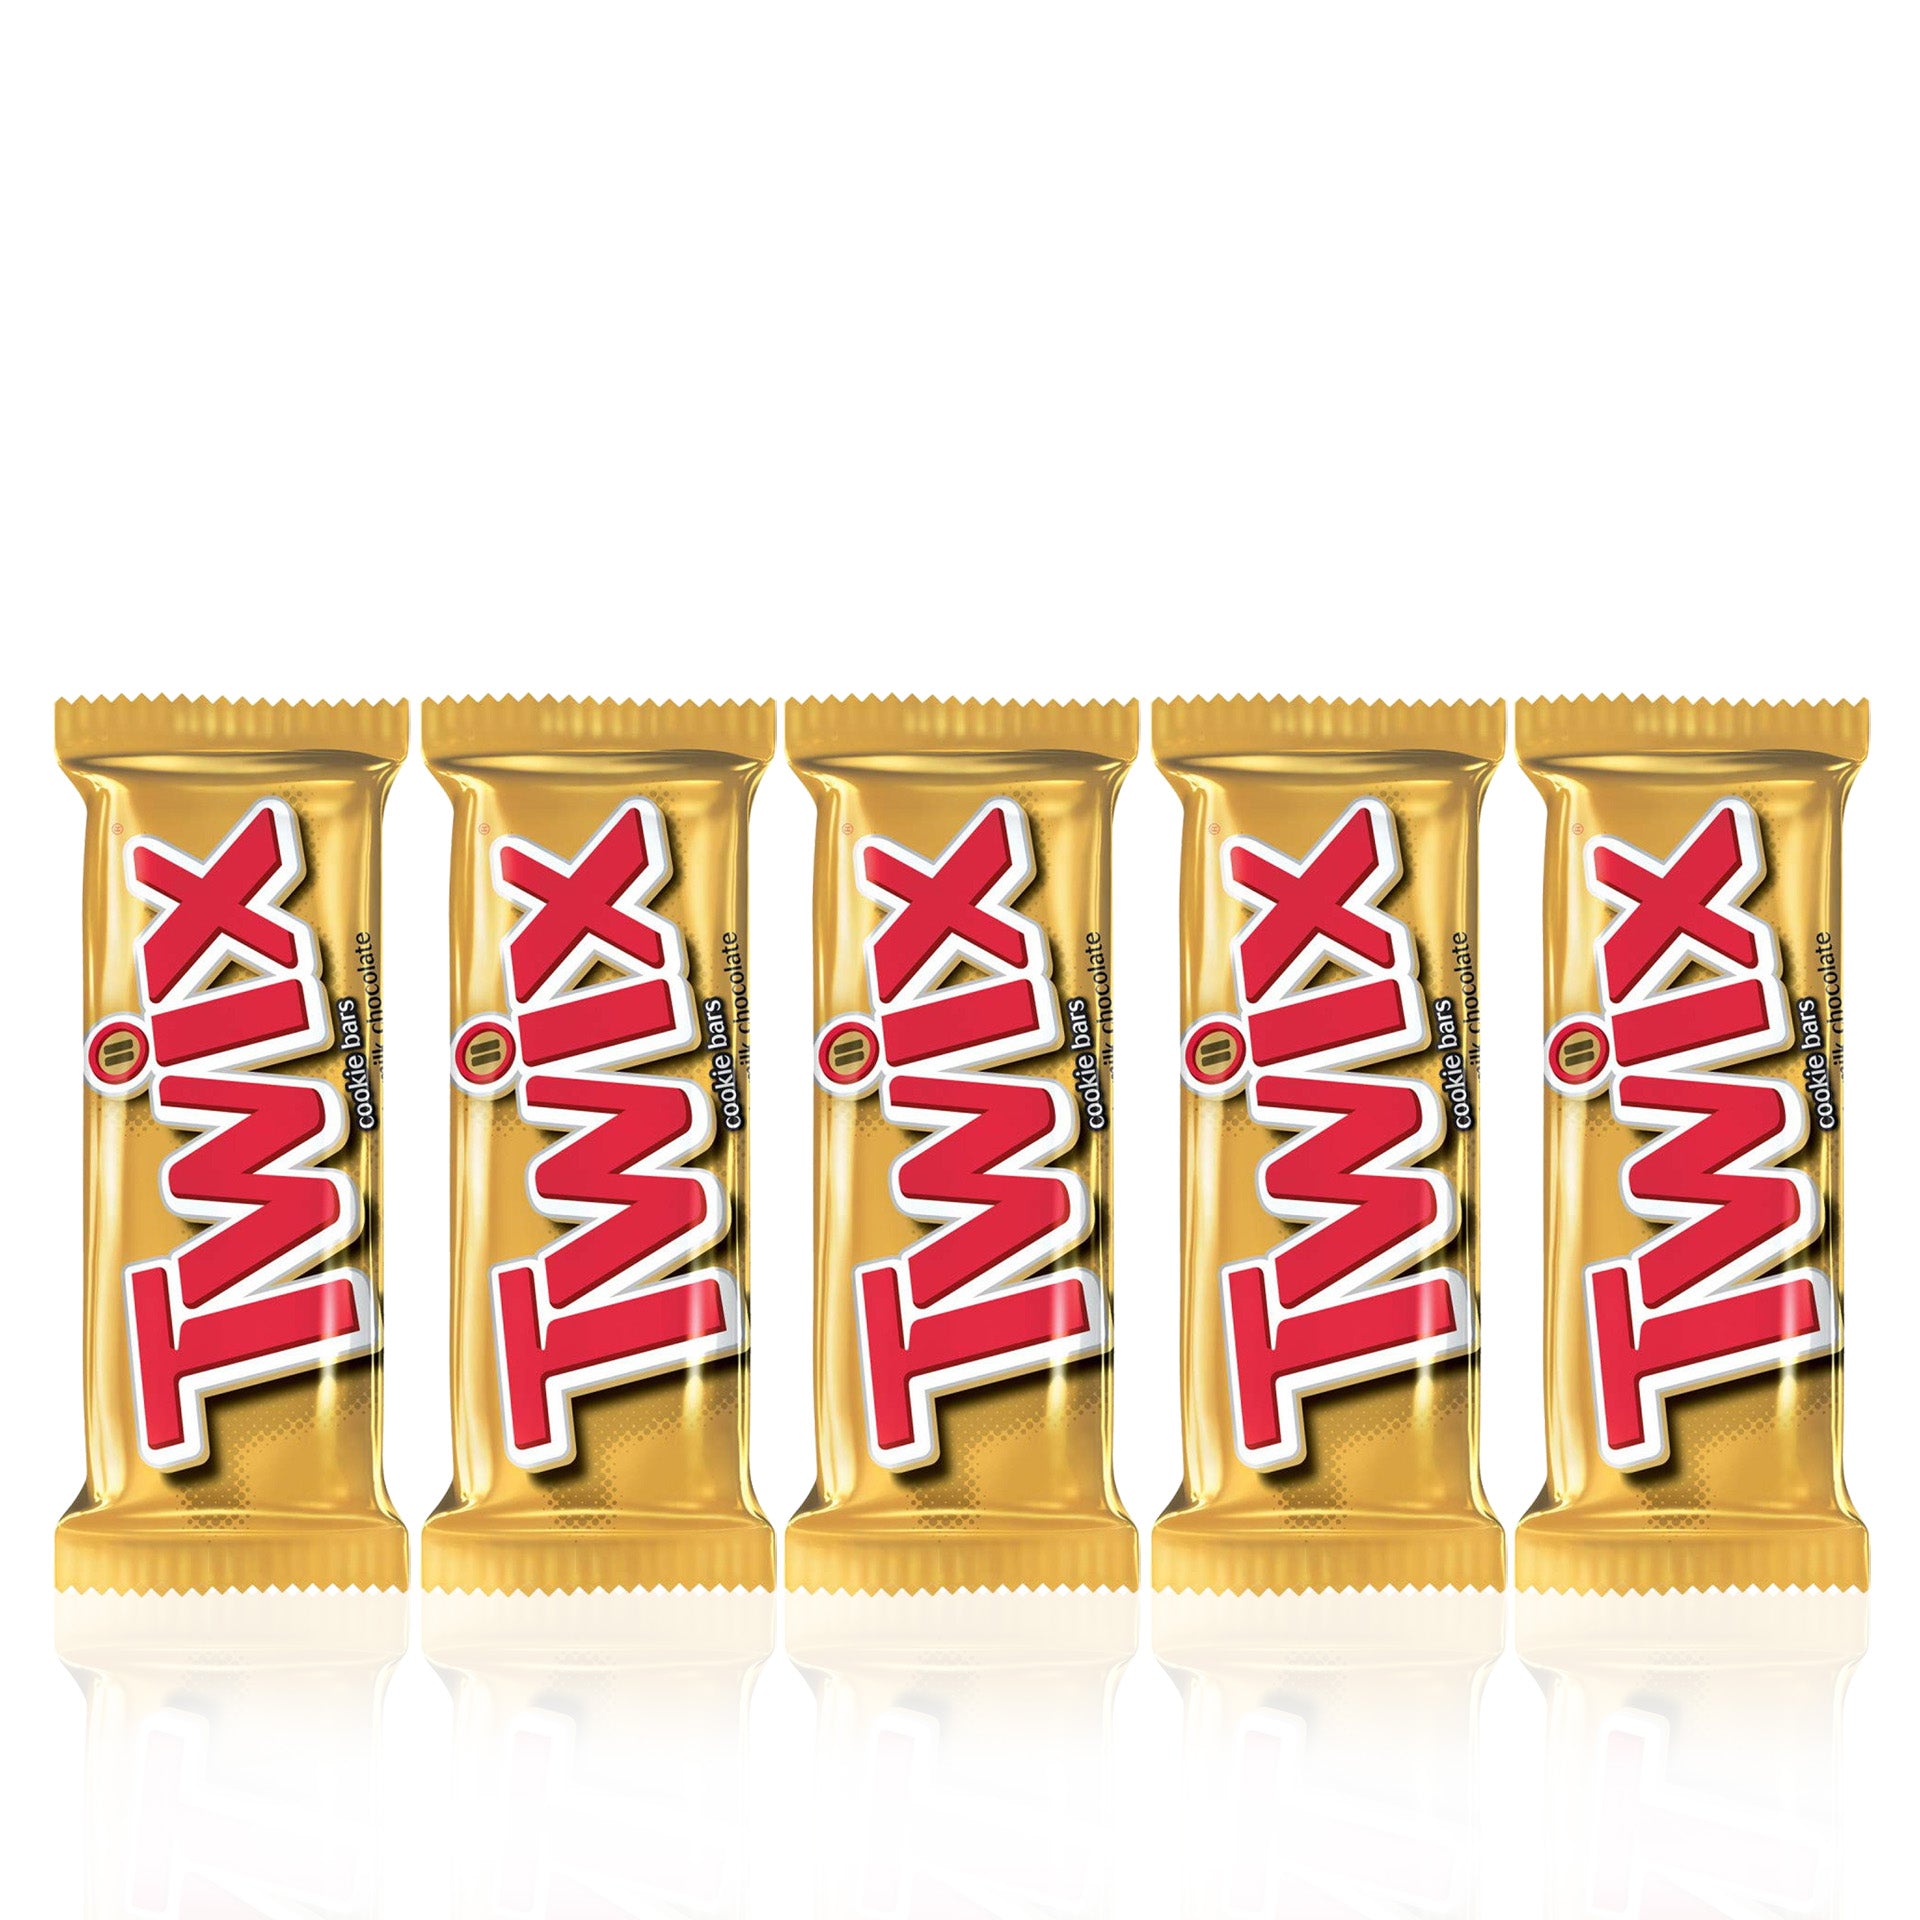 Twix Chocolate 50 gr - Pack 5 x 50 gr